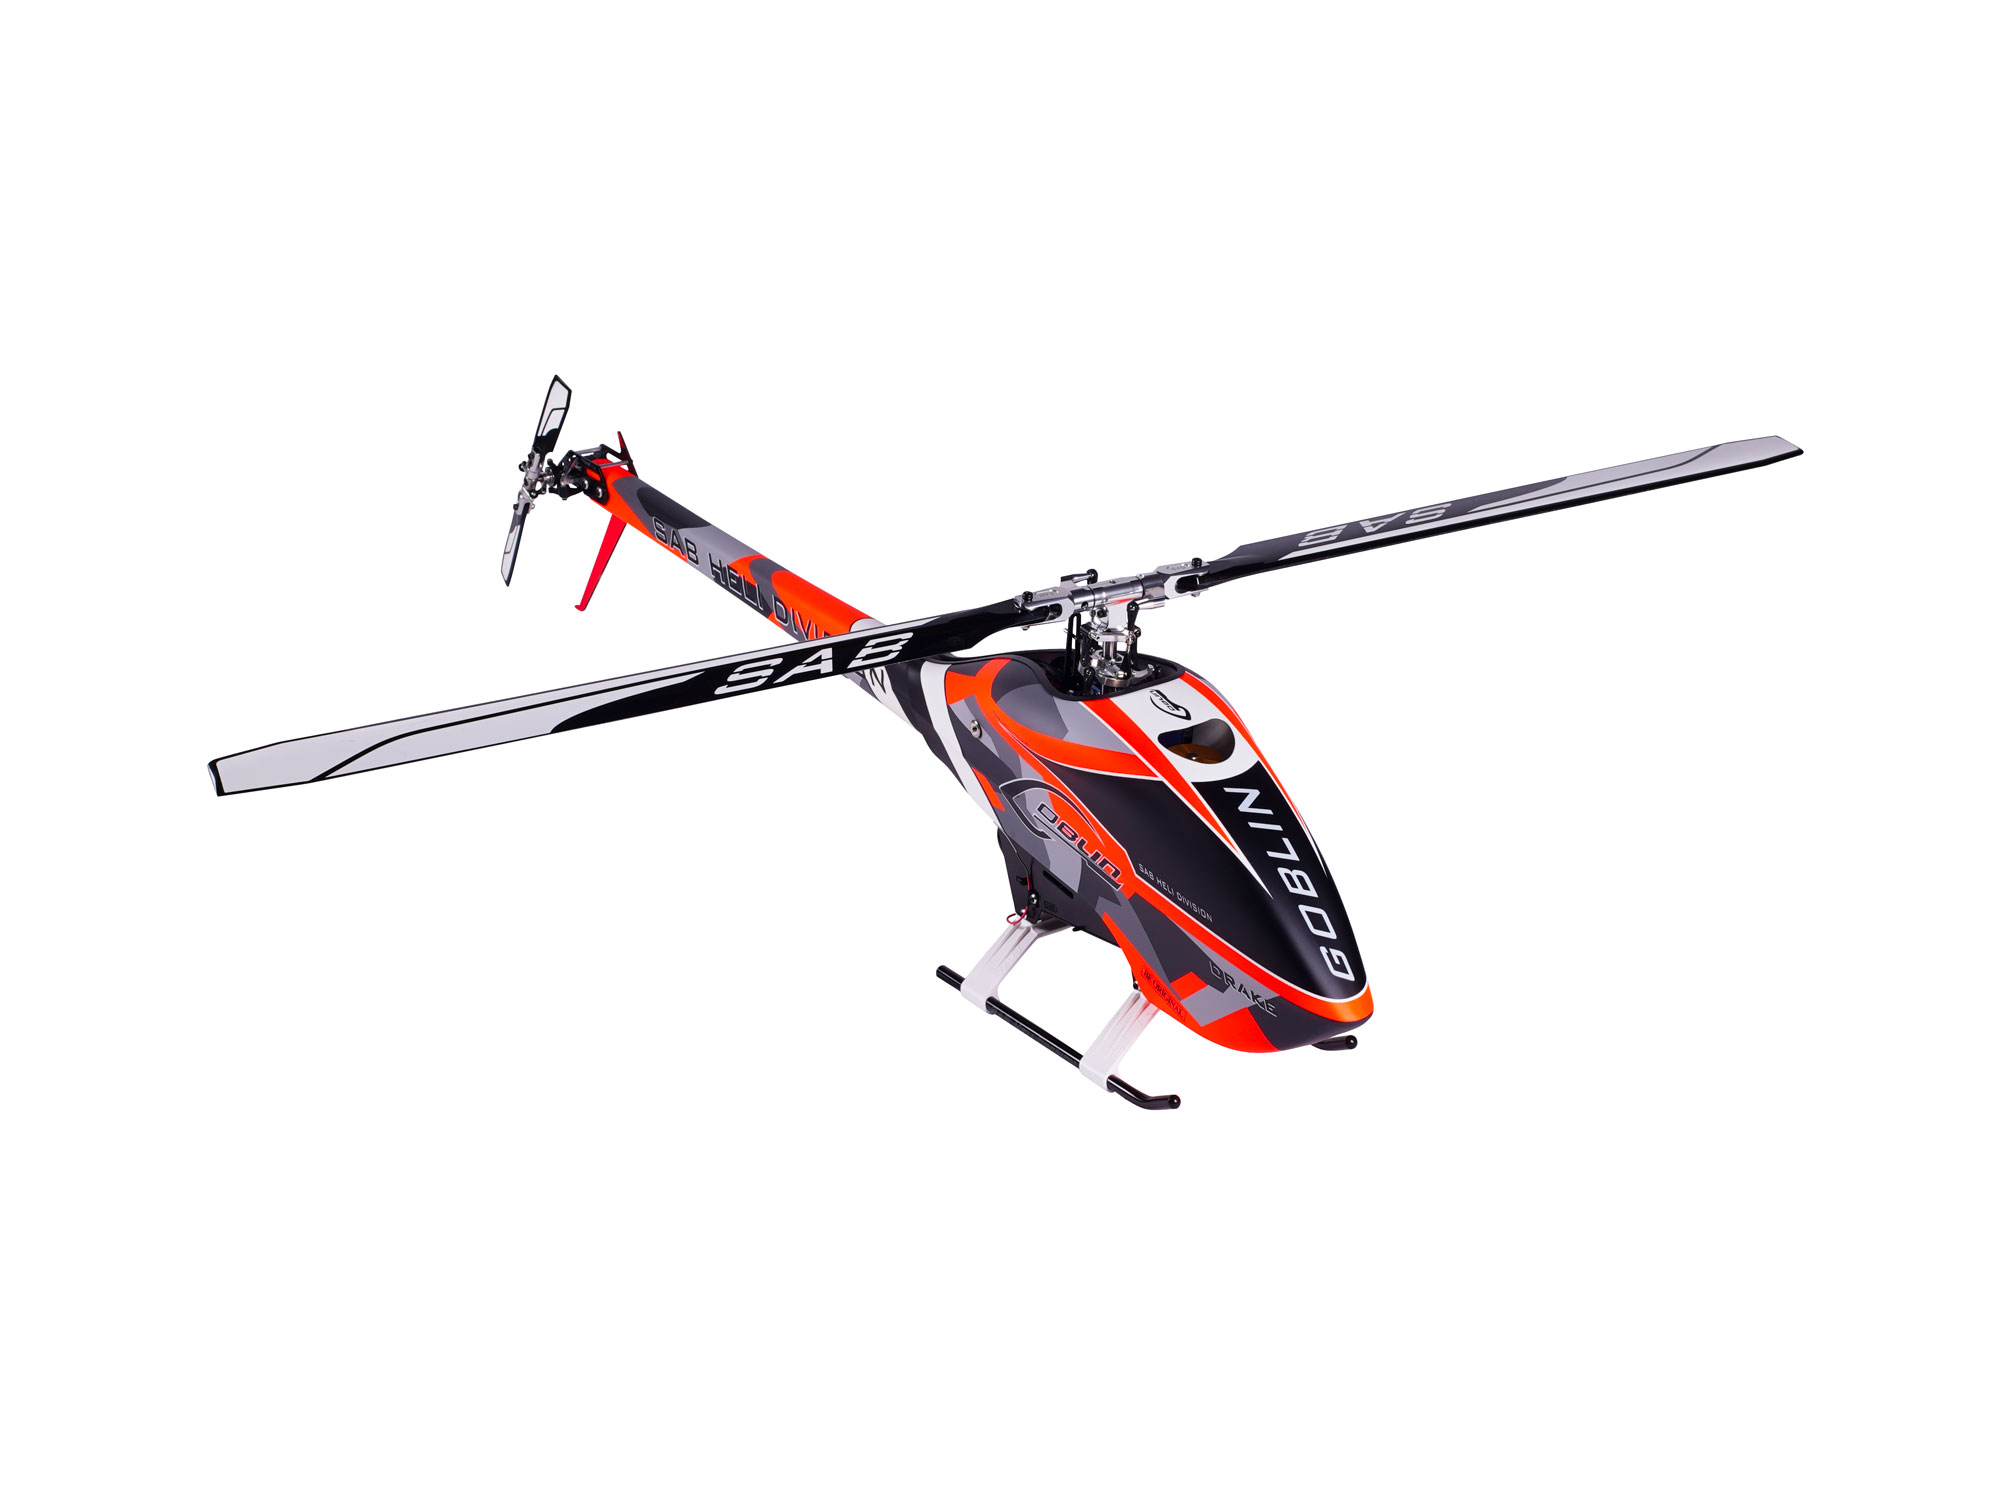 Goblin 570 Sport Goblin Helicopters